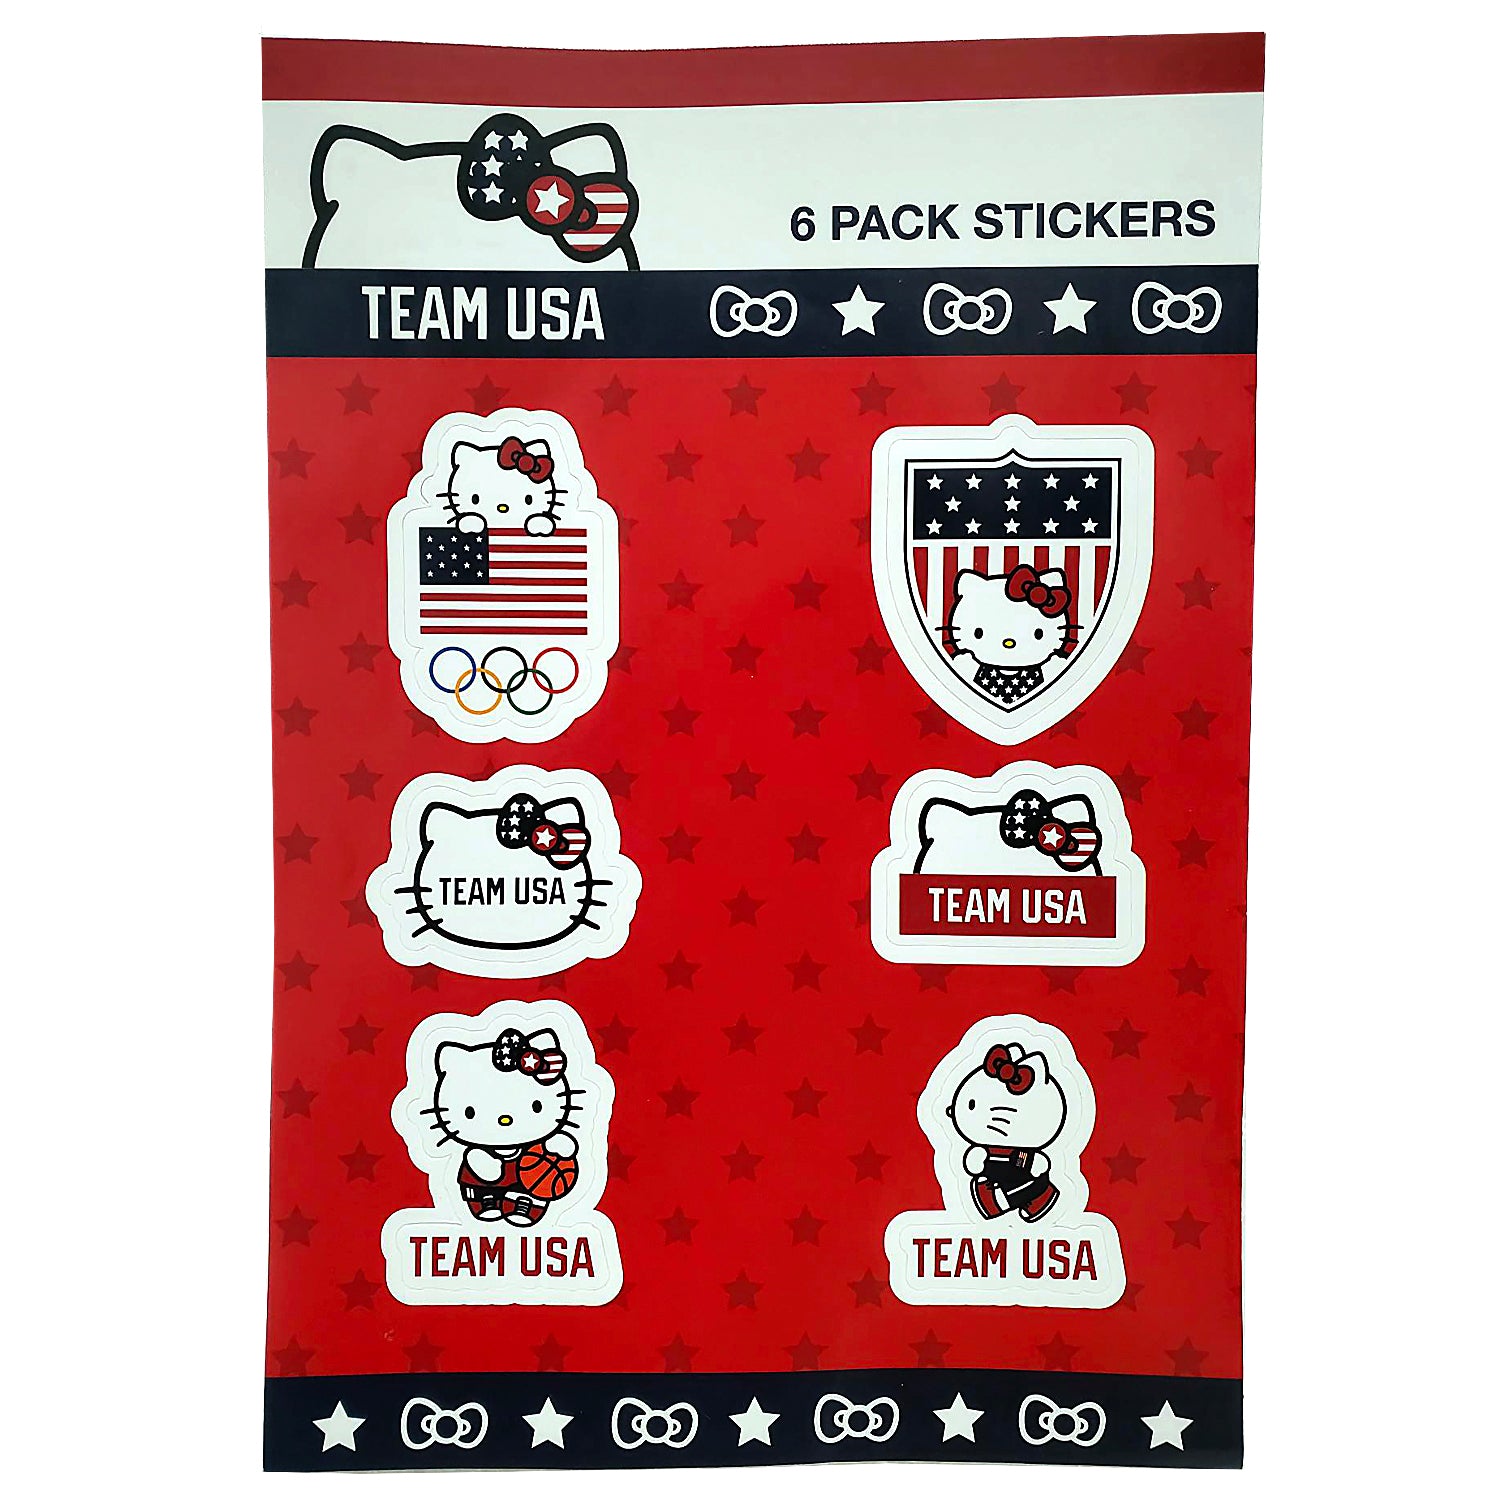 Team USA x Hello Kitty Stickers